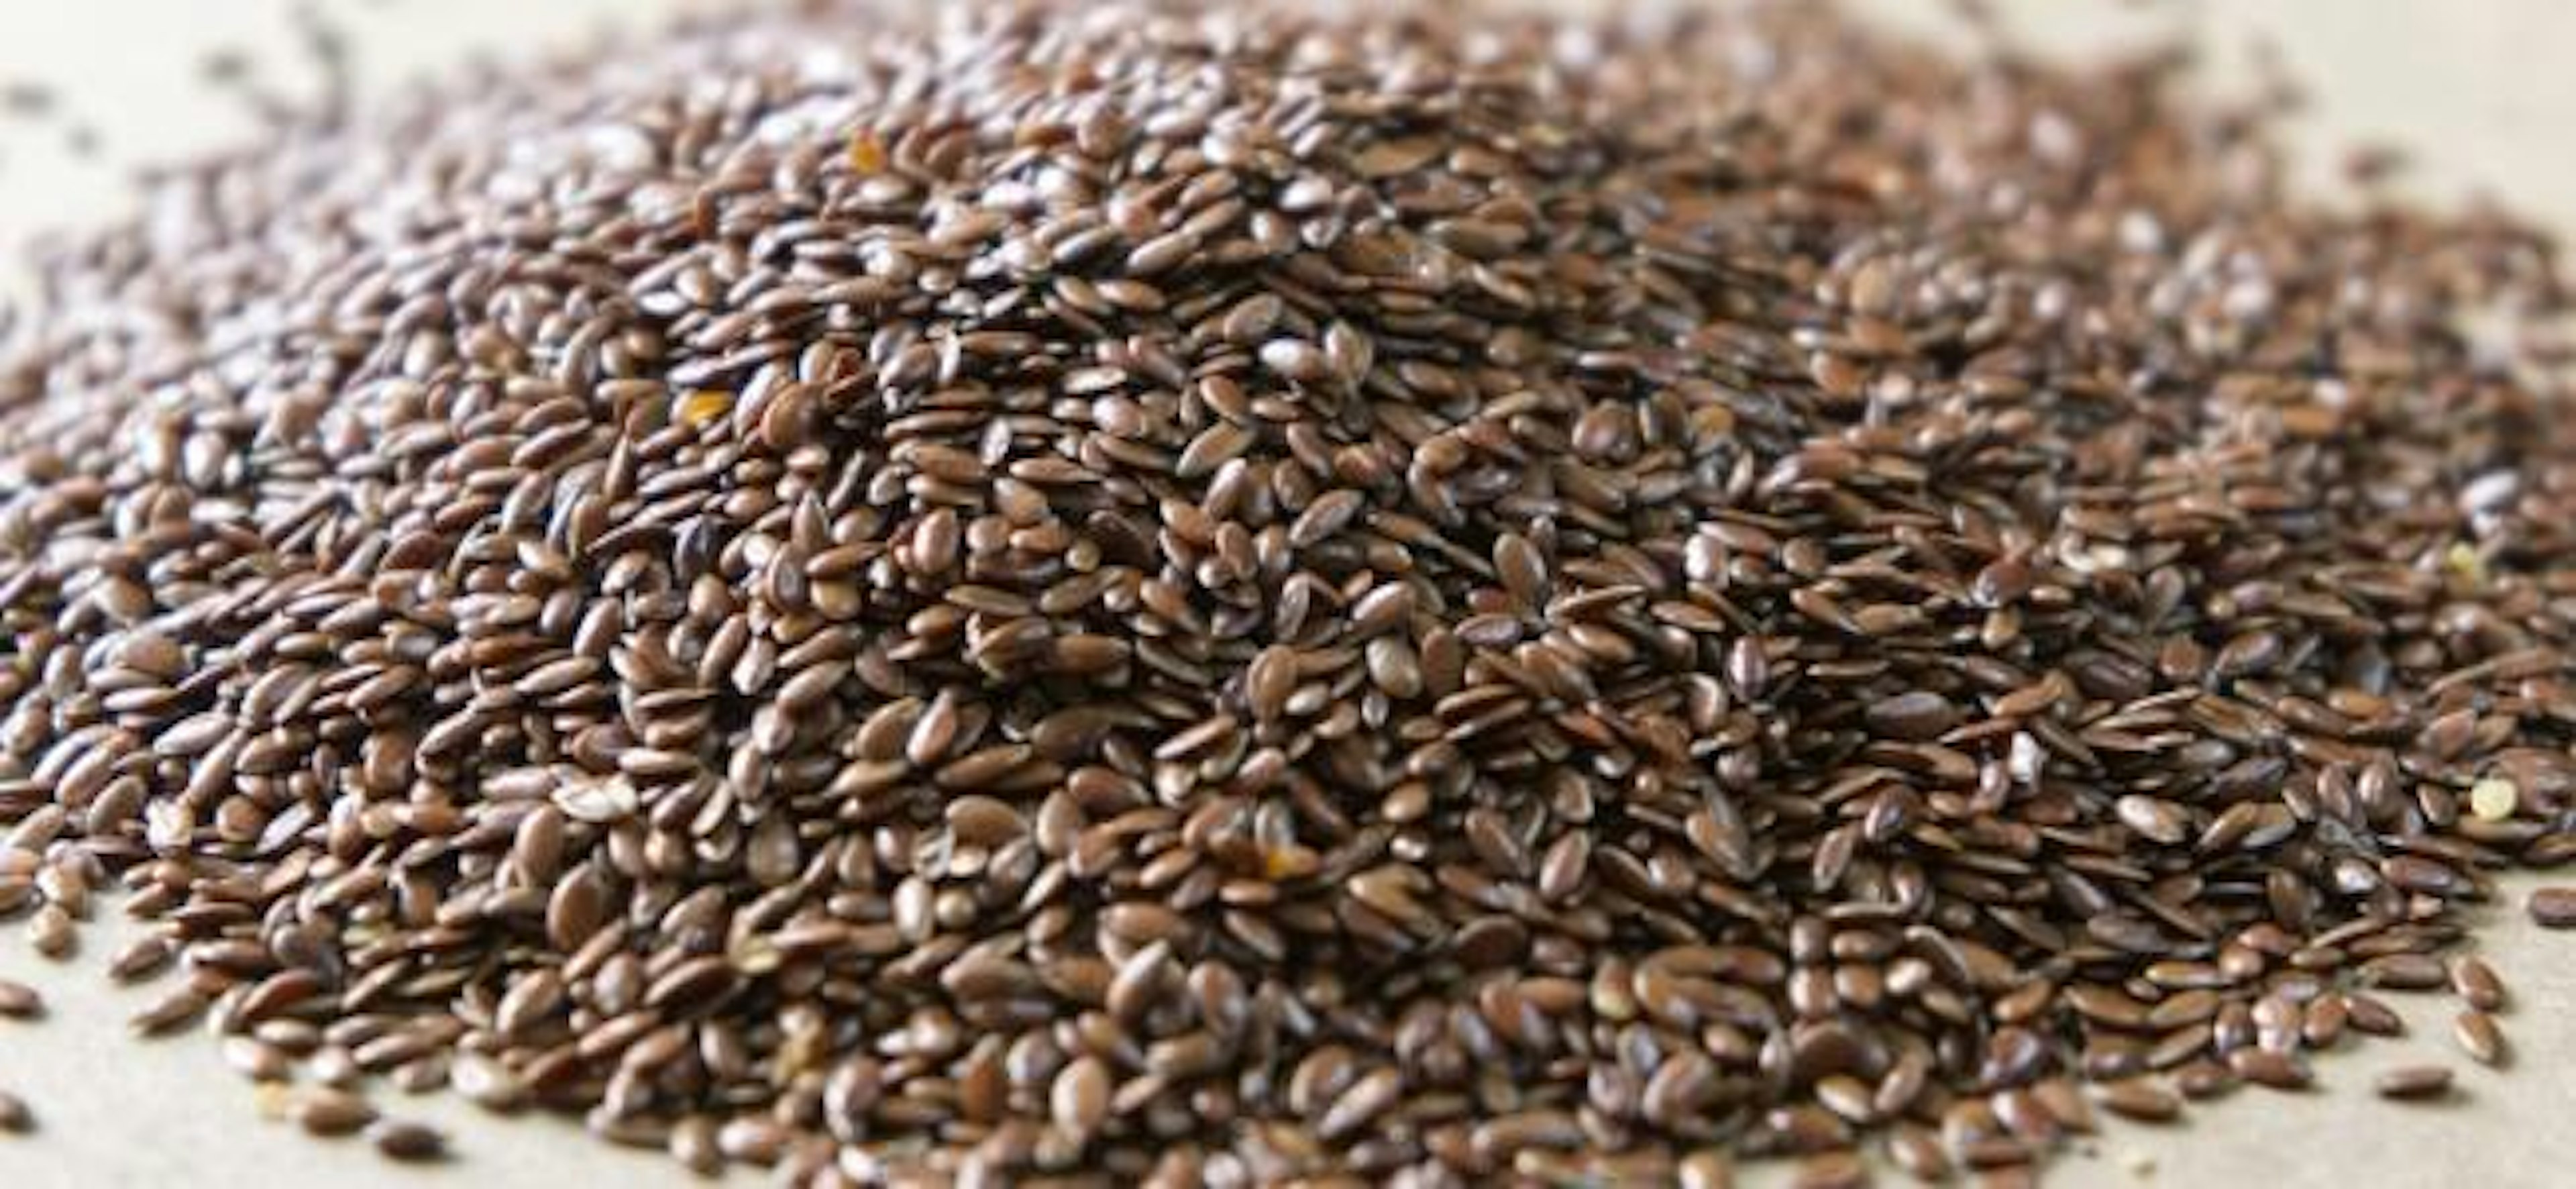 Brown flax seeds image